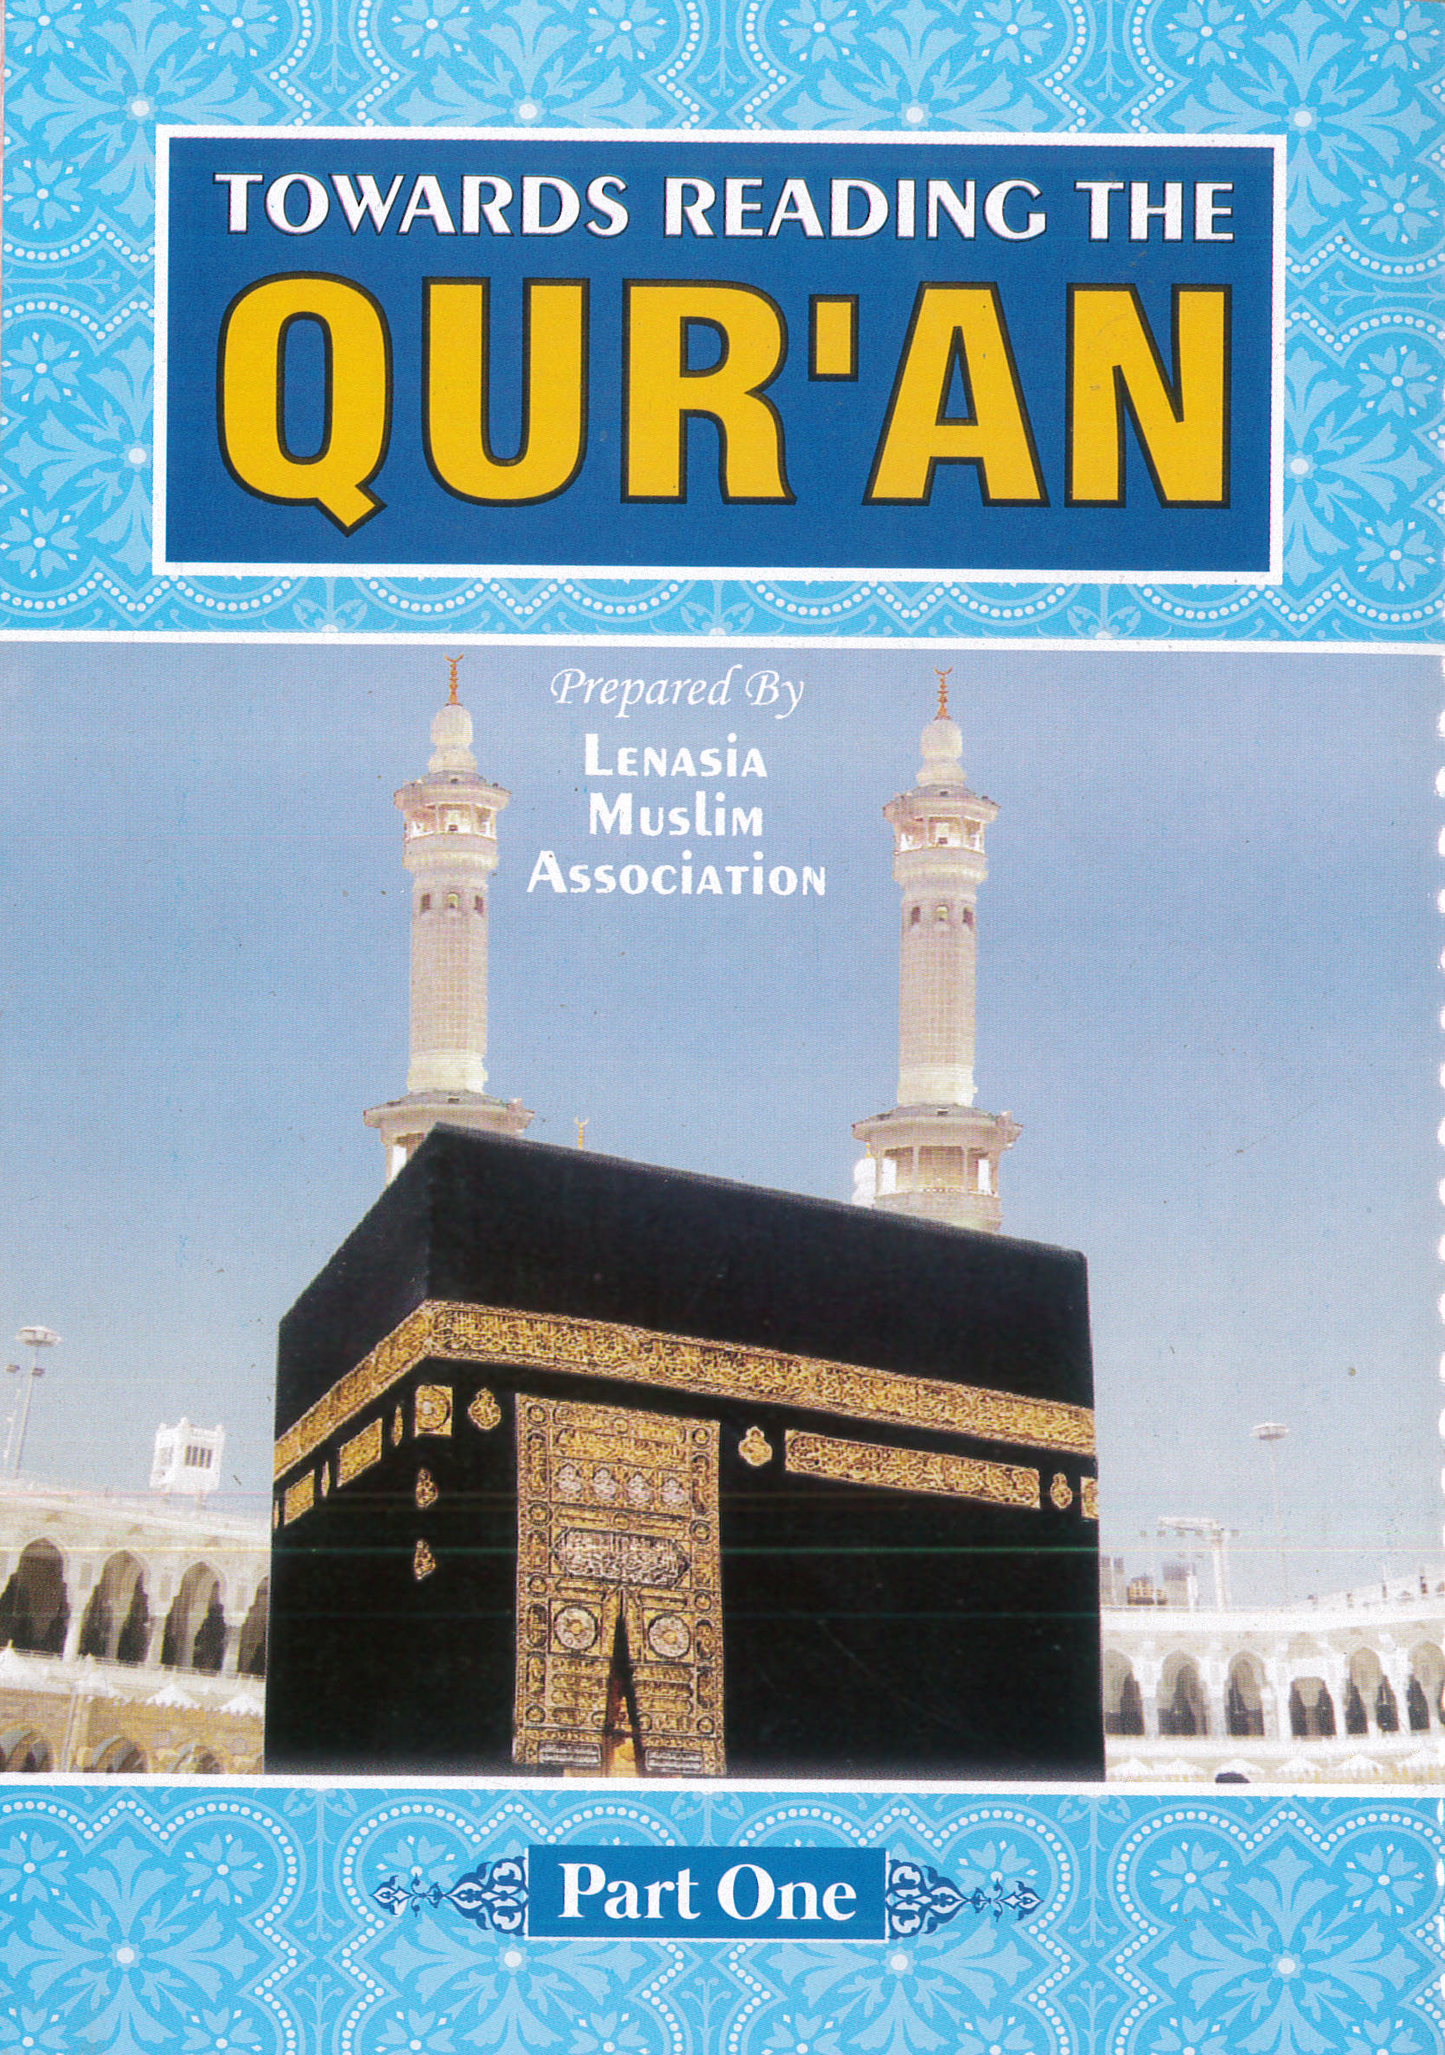 Towards Reading the Quraan by Lenasia Muslim Association